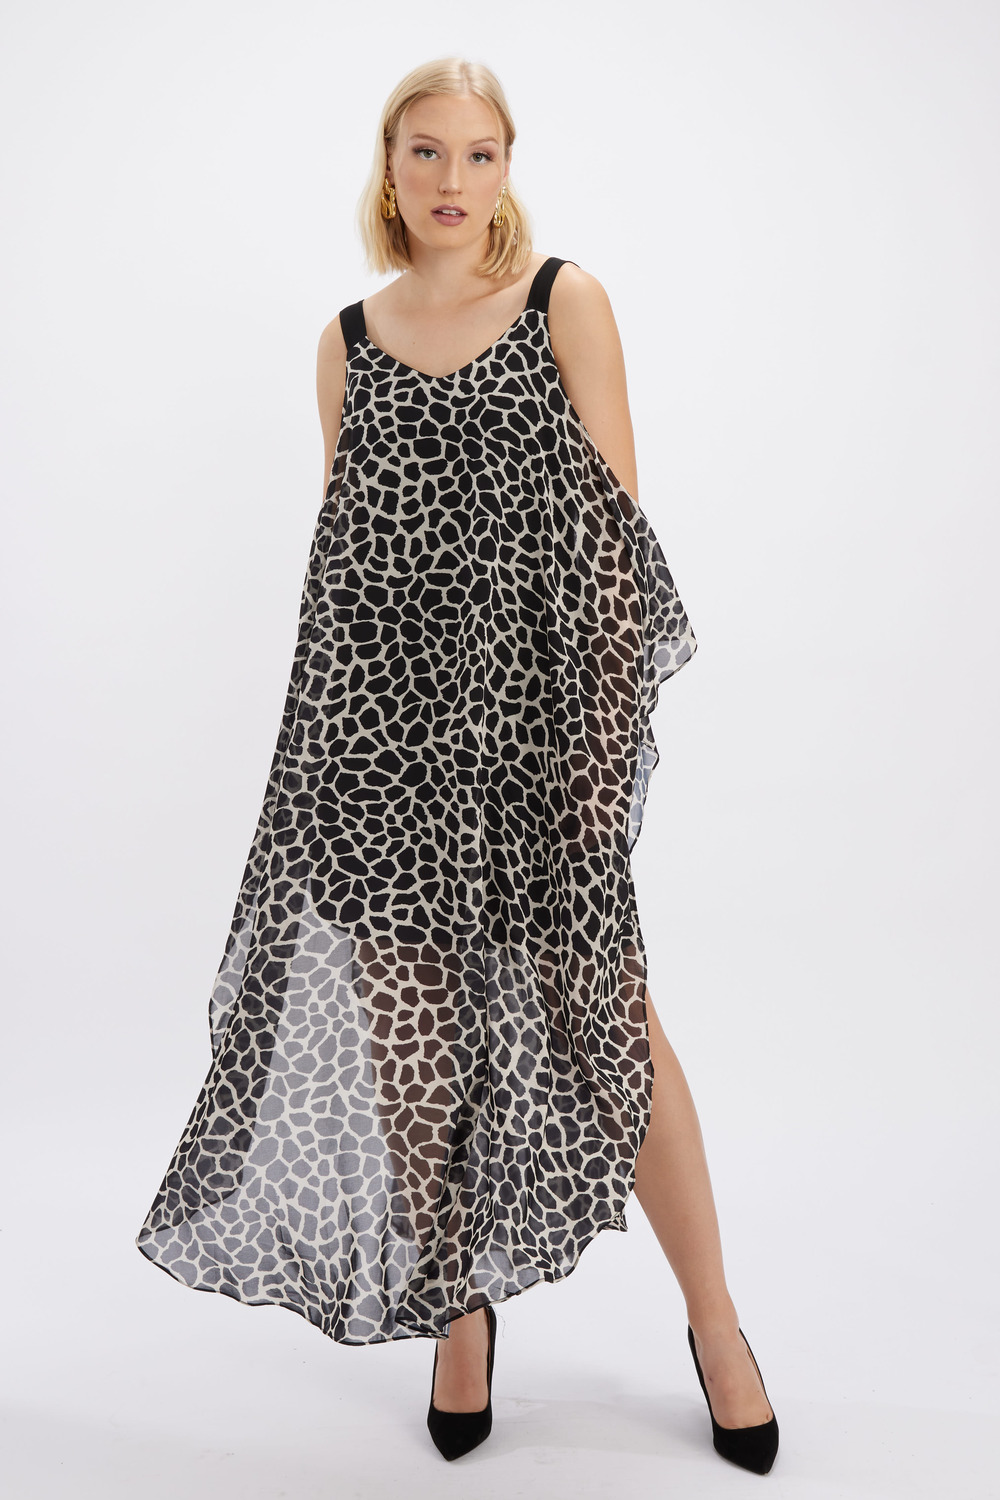 Giraffe Print Dress Style 246208U. Black/beige